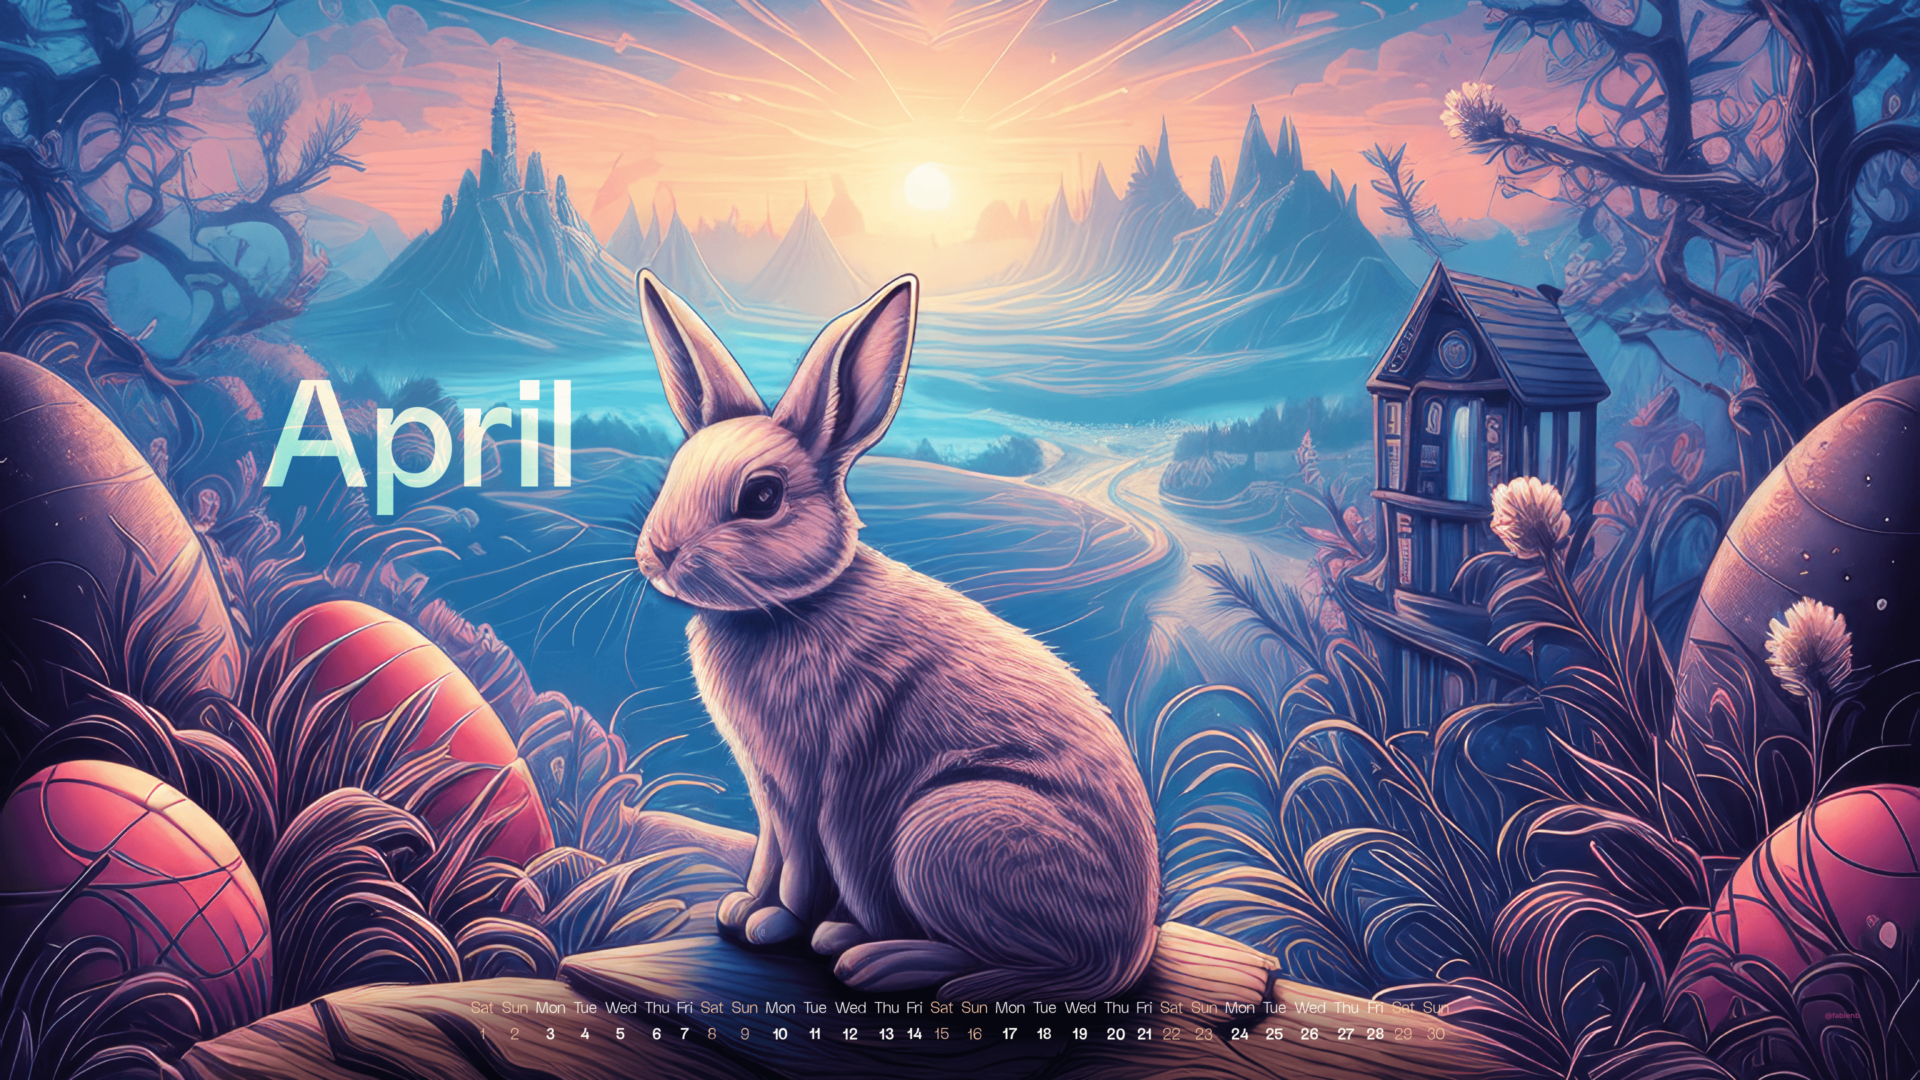 AI Desktop Calendar wallpapers April 2023 by @fabienb